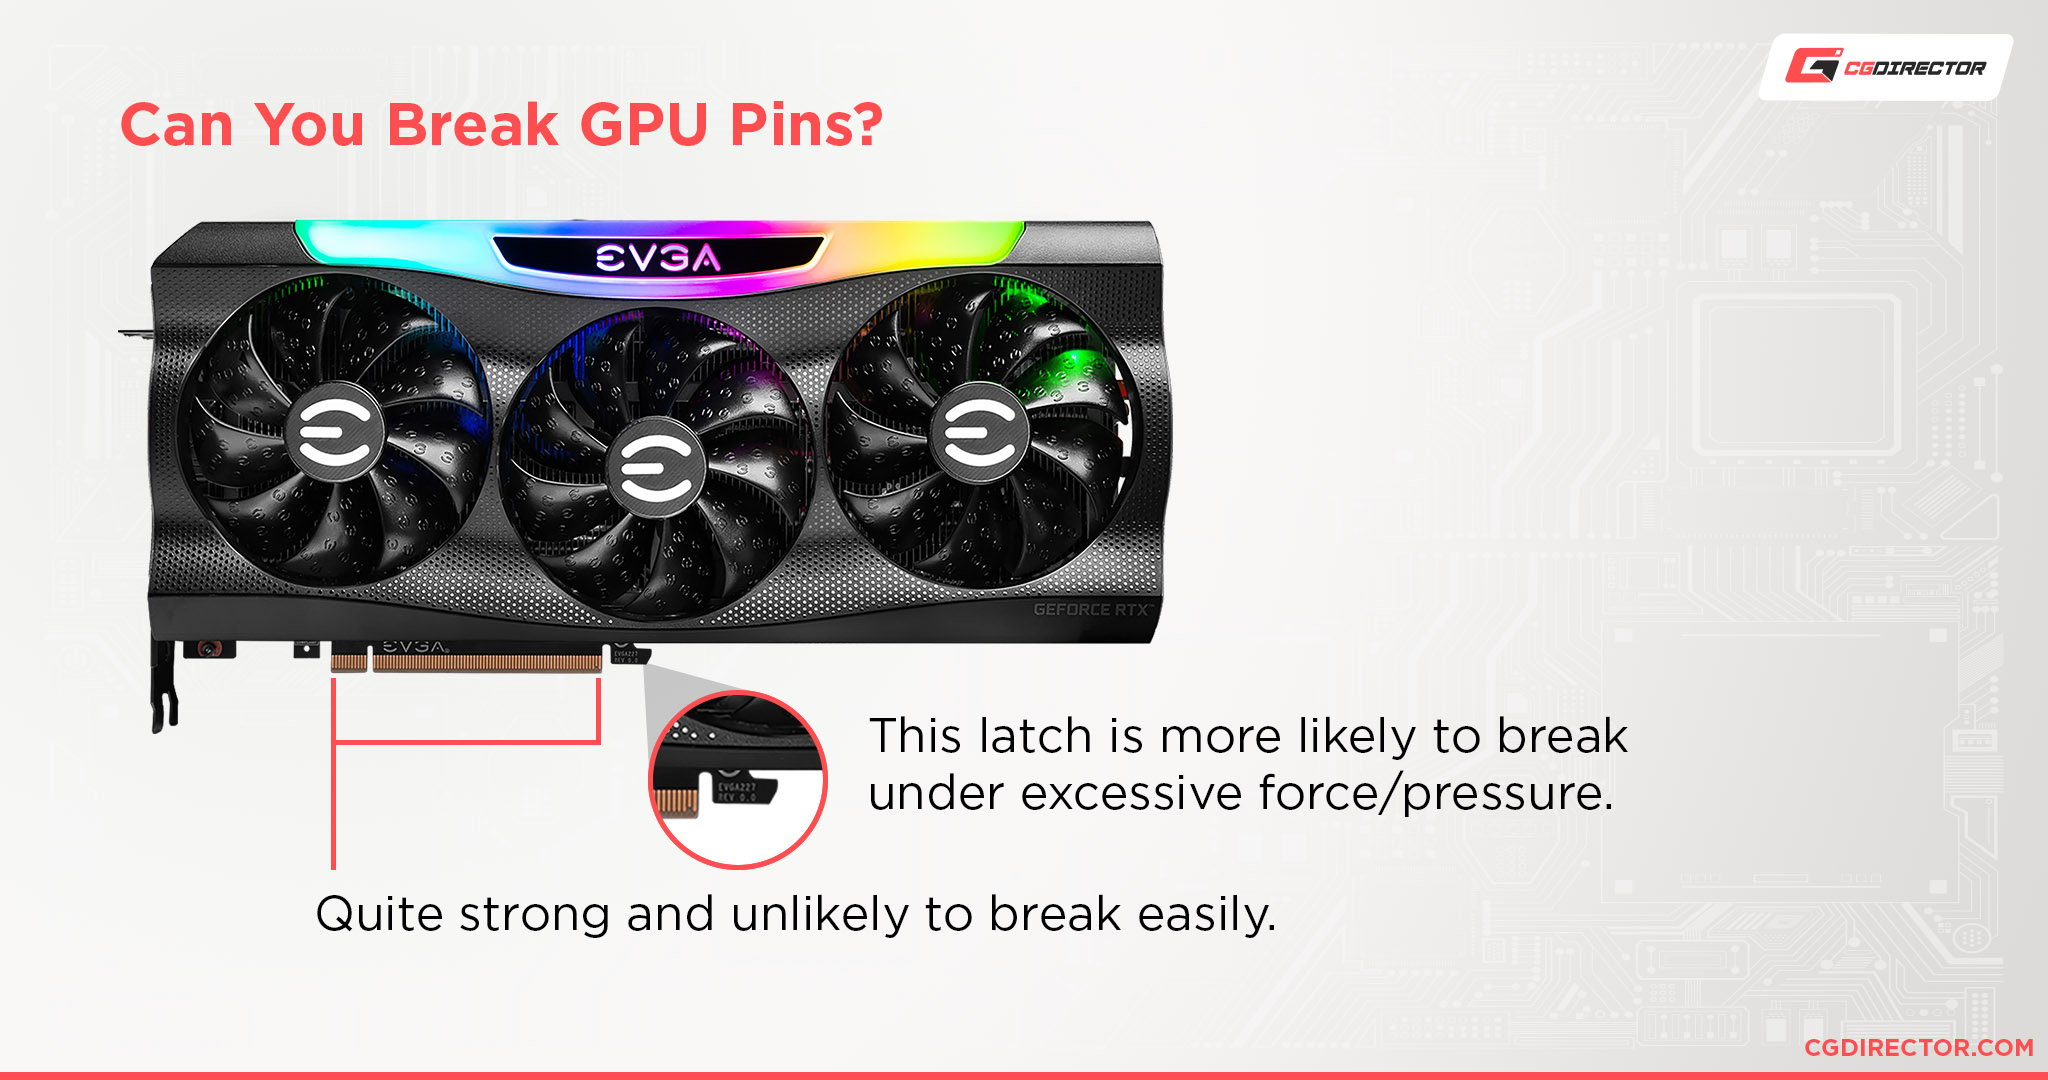 Can you break GPU pins